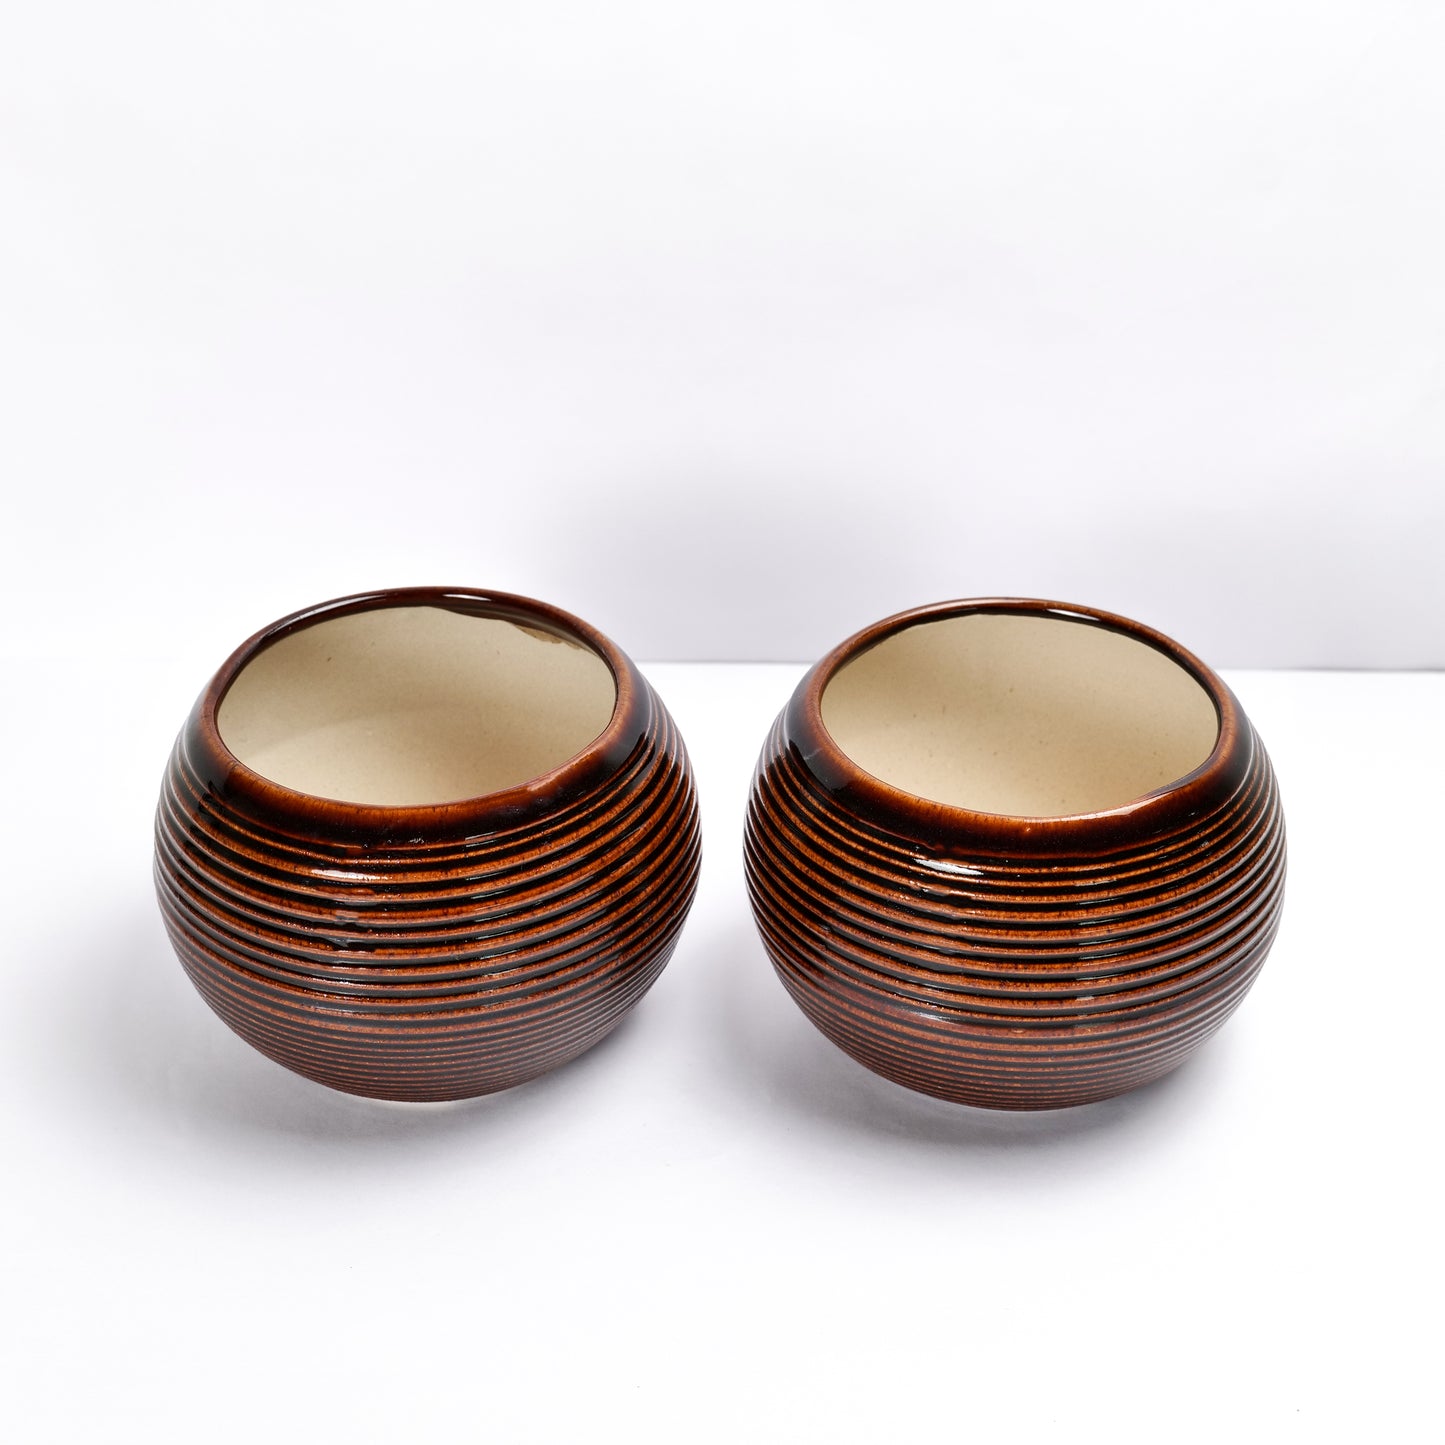 'Cinnamon Ridged' Ceramic Studio Pottery Planter Pot - artystagallery